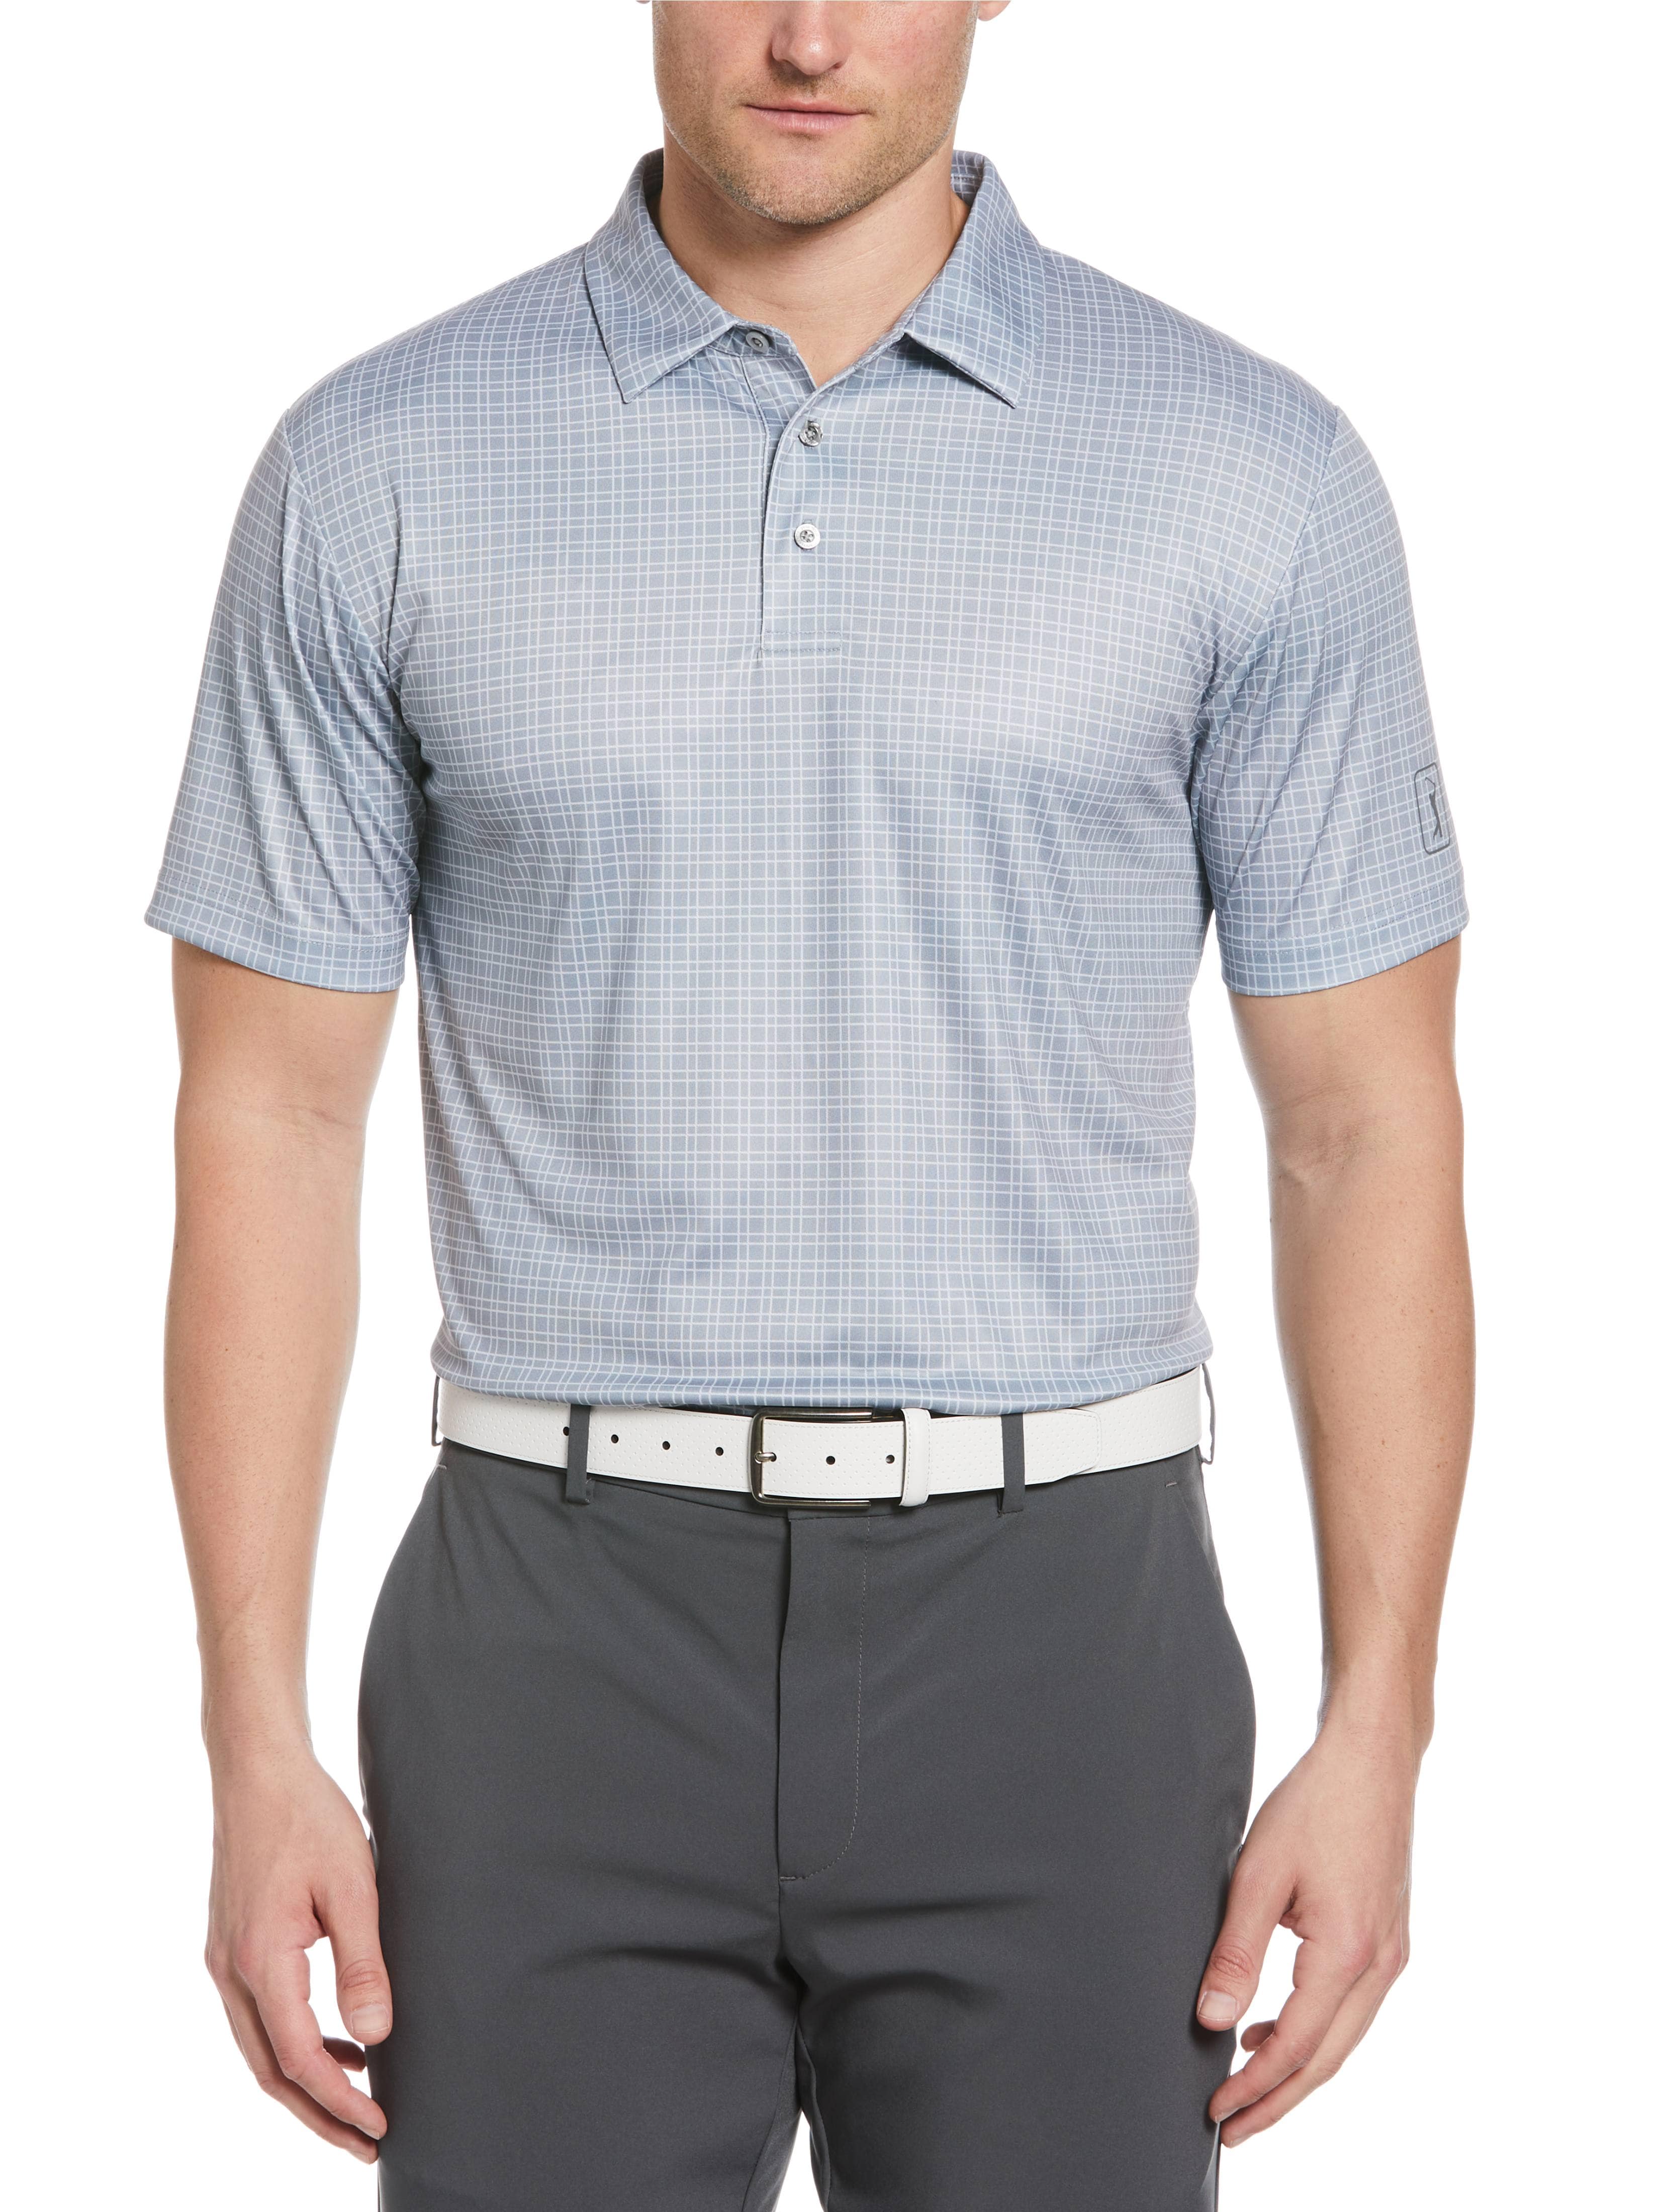 PGA TOUR Apparel Mens Menswear Print Golf Polo Shirt, Size XL, Tradewinds Gray, 100% Polyester | Golf Apparel Shop